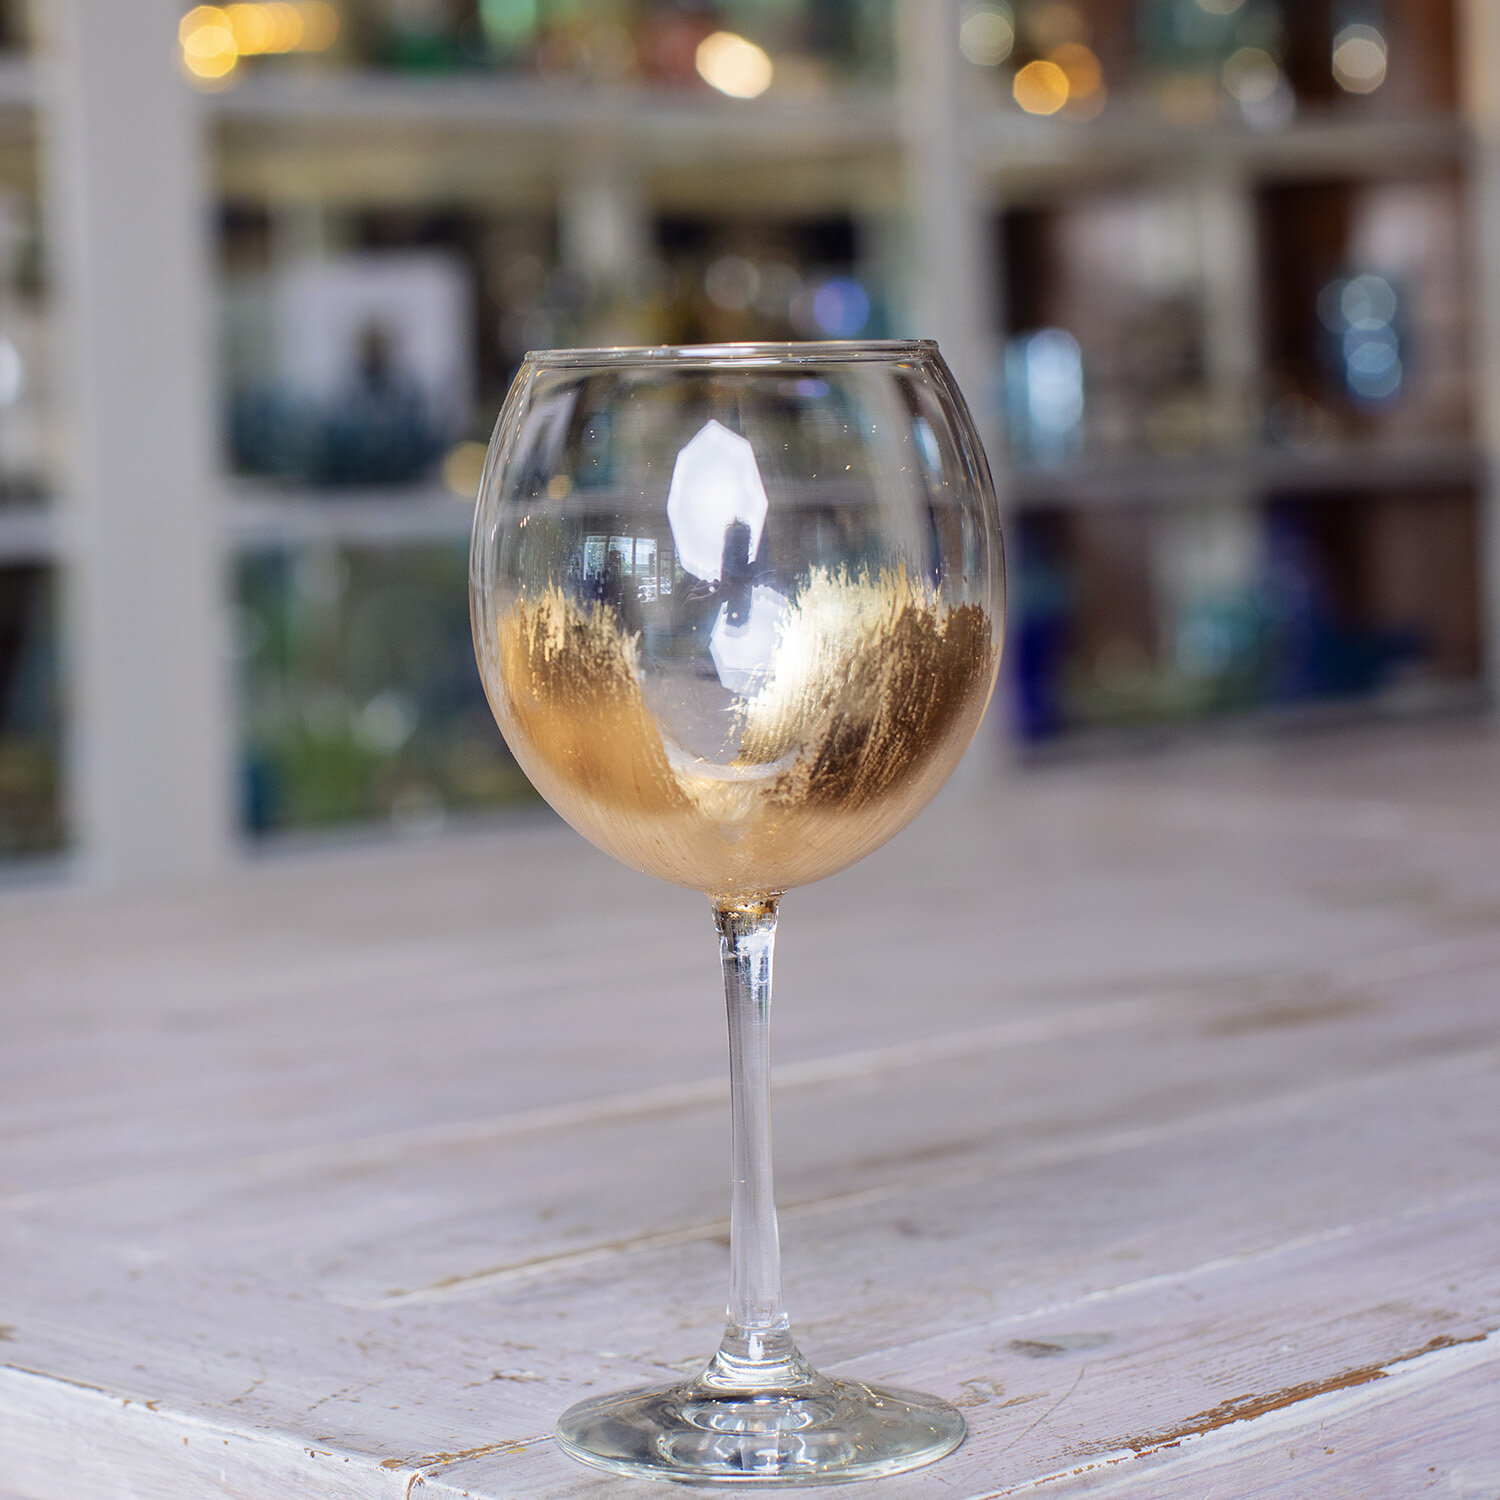 Eileen Morrison Designs Gold Stemless Wine Glass — Hillyer House